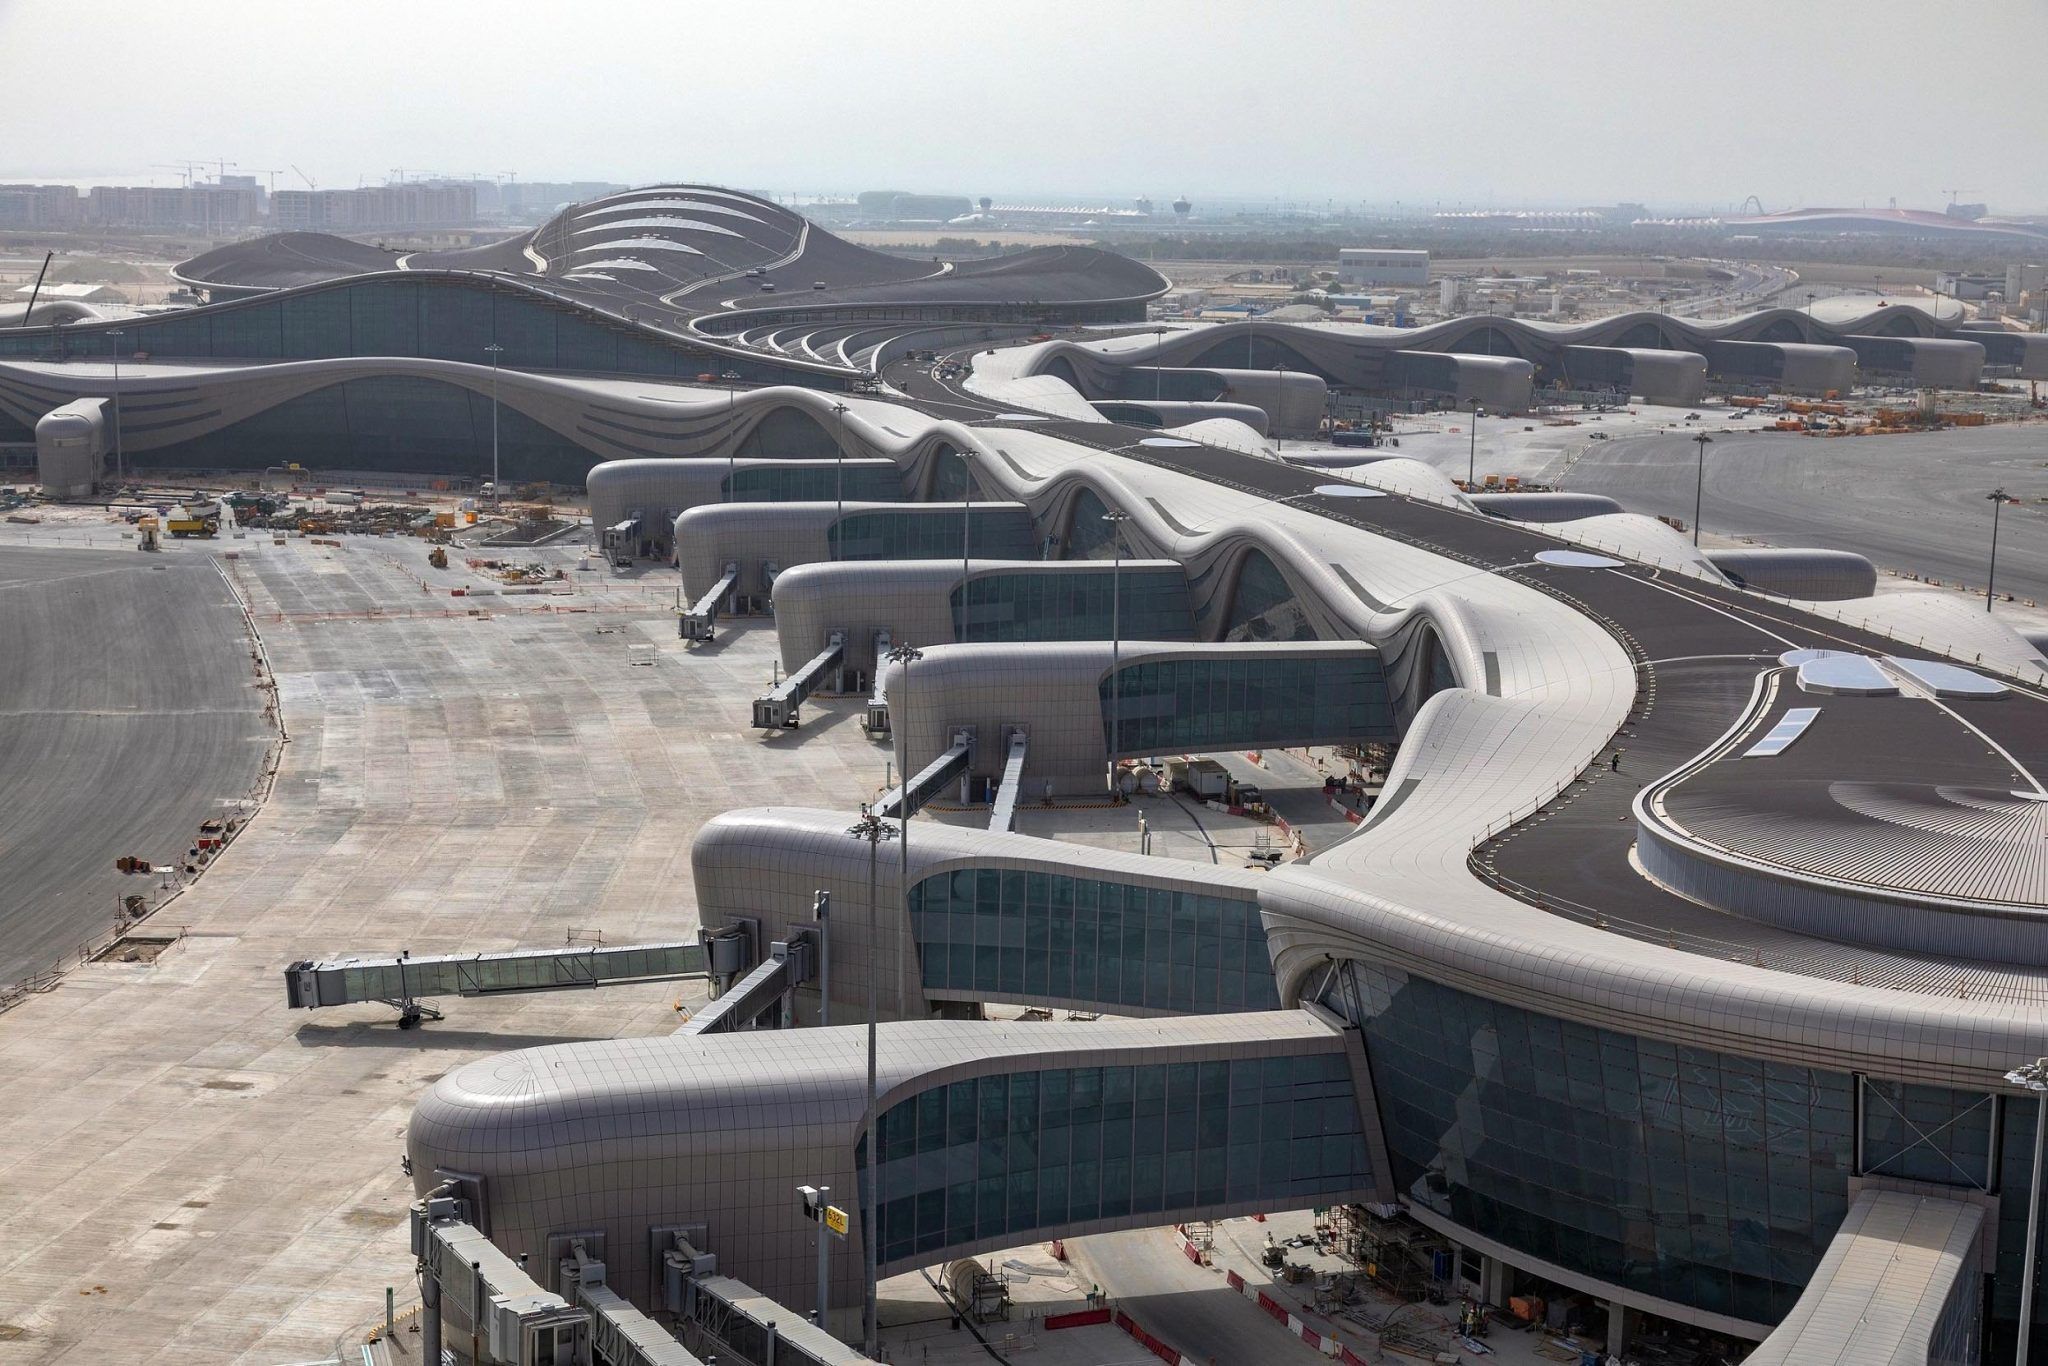 Abu Dhabi International Airport's new Midfield Terminal